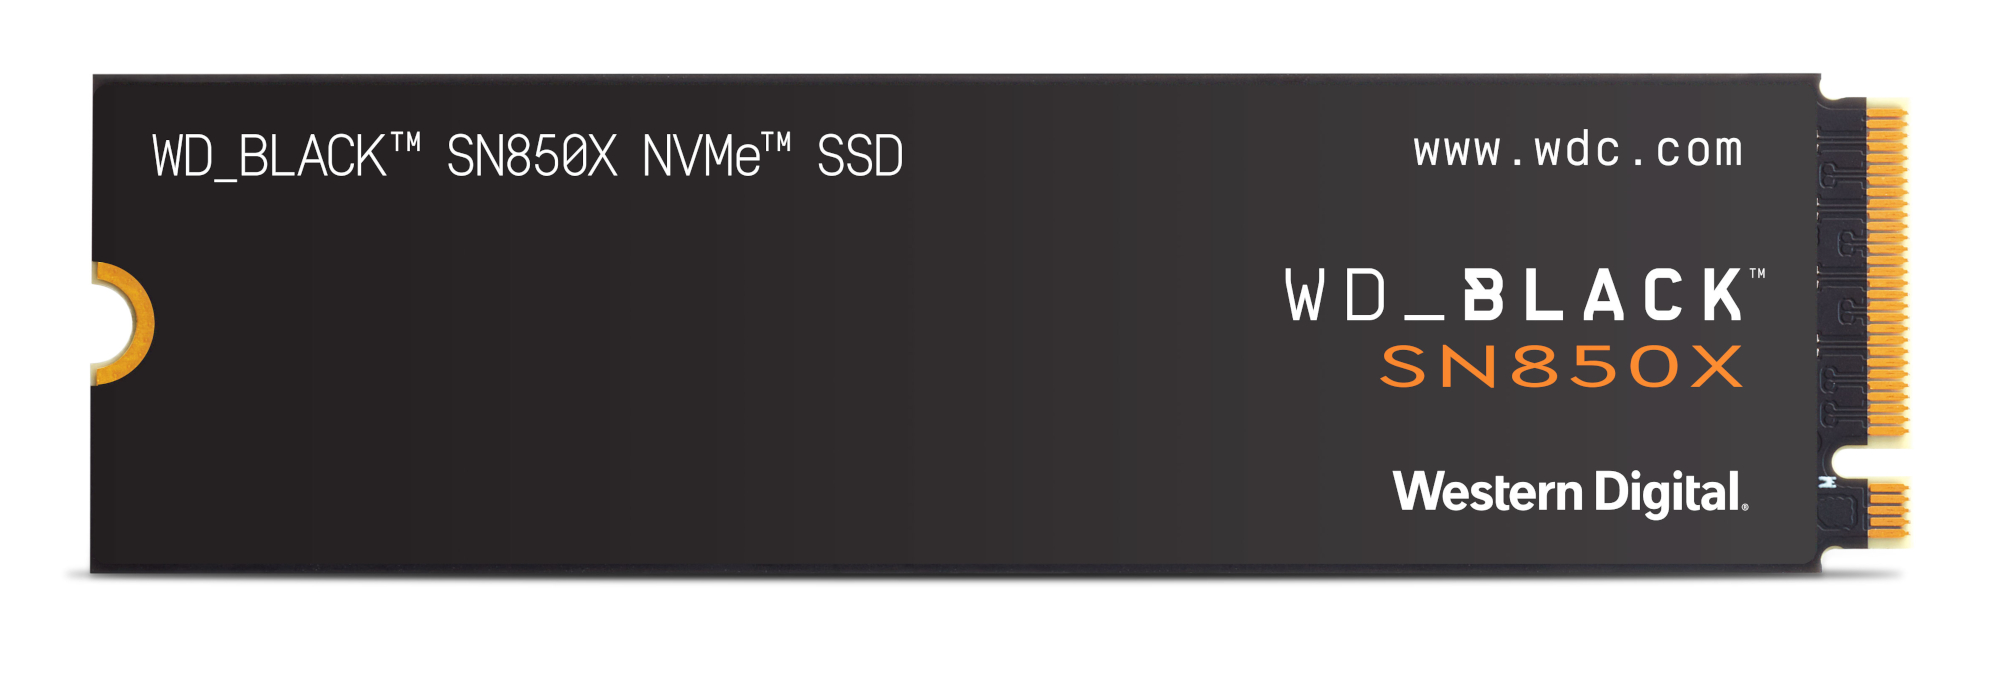 WD Black SN850X - Best PCIe 4.0 SSD